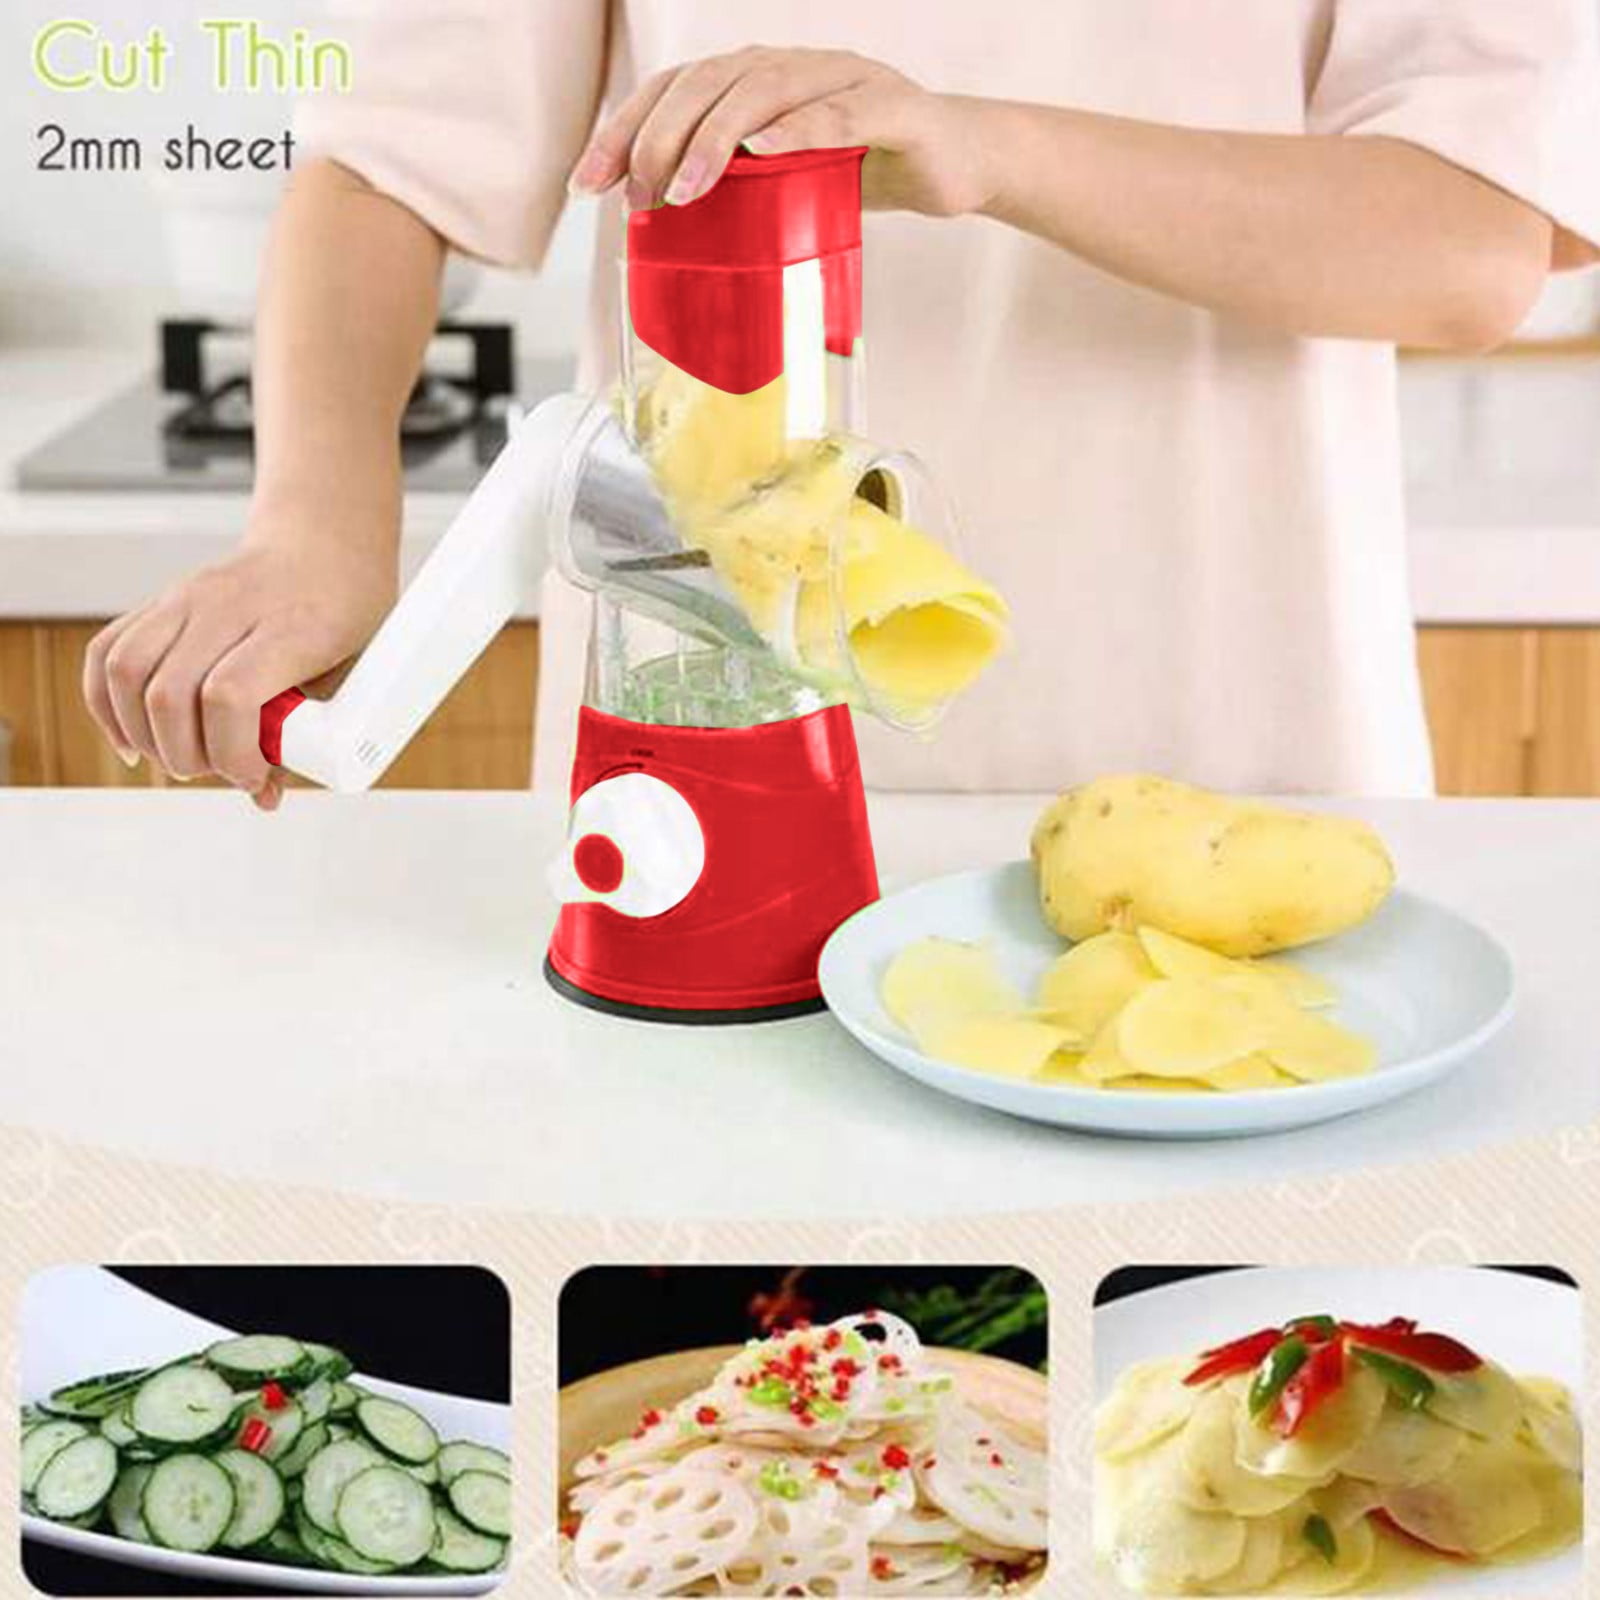 Multifunctional Shredder And Vegetable Cutter Kitchen Gadget – EZ